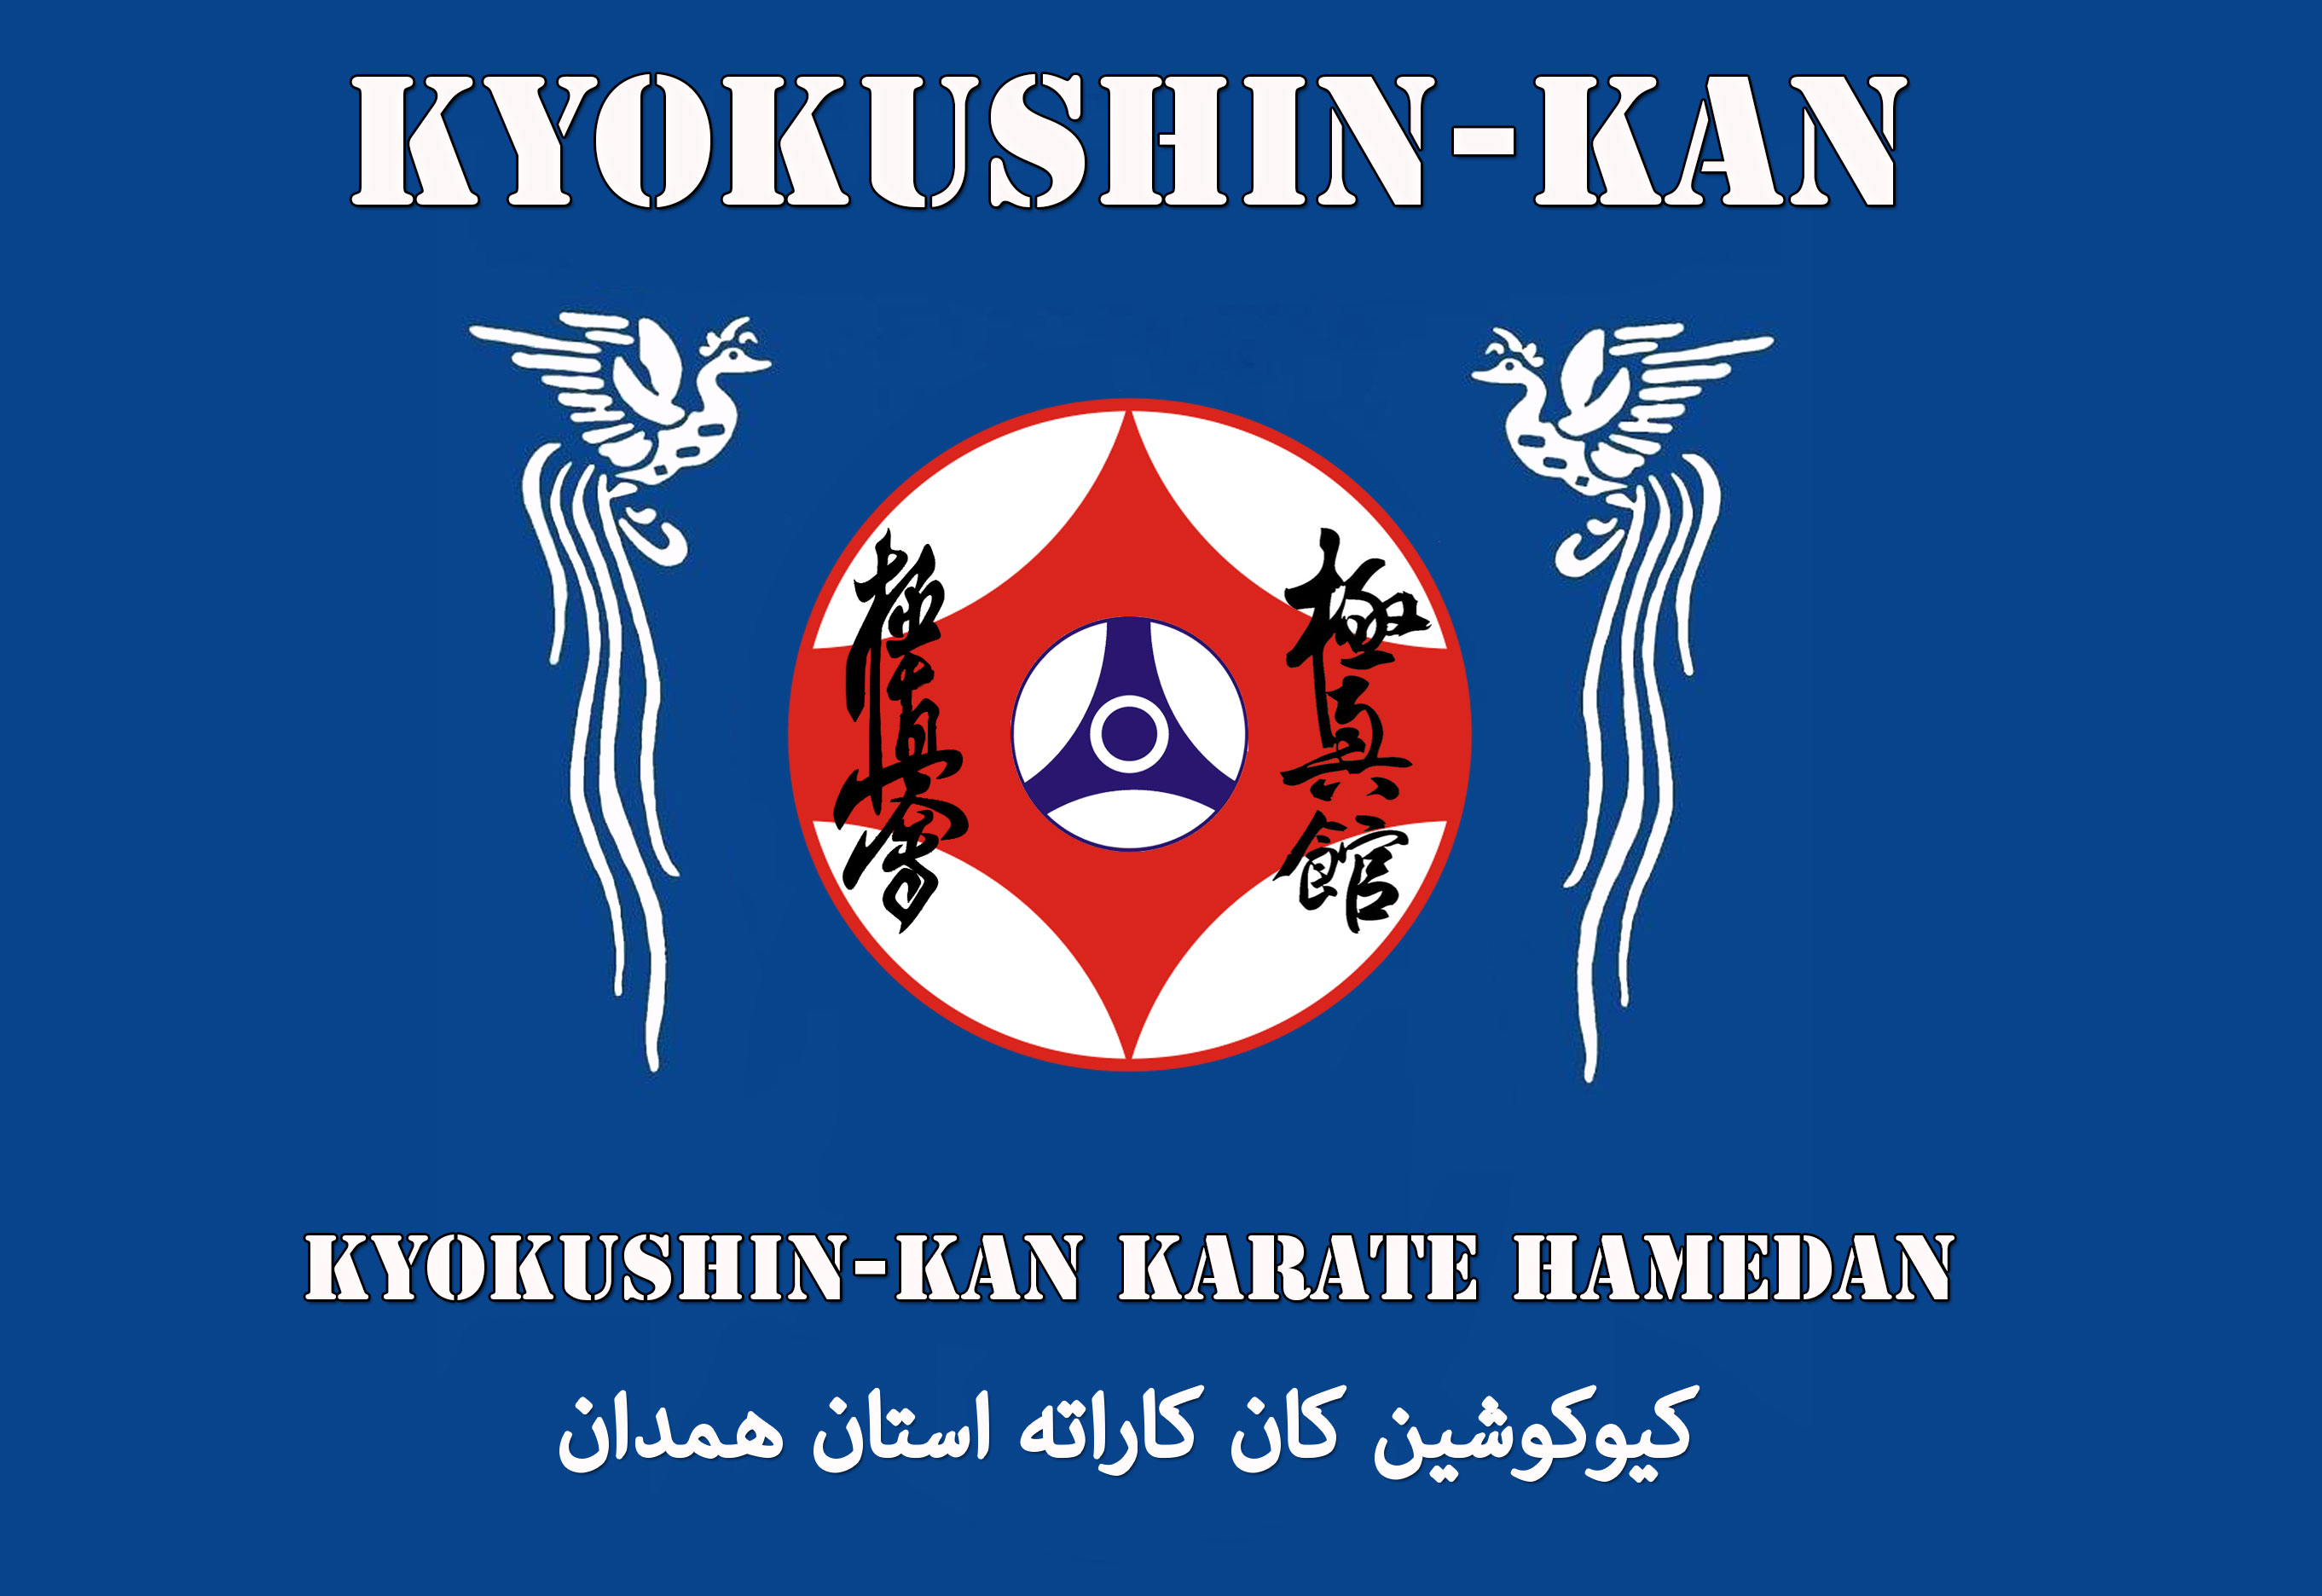 kyokushin-kan Hamedan